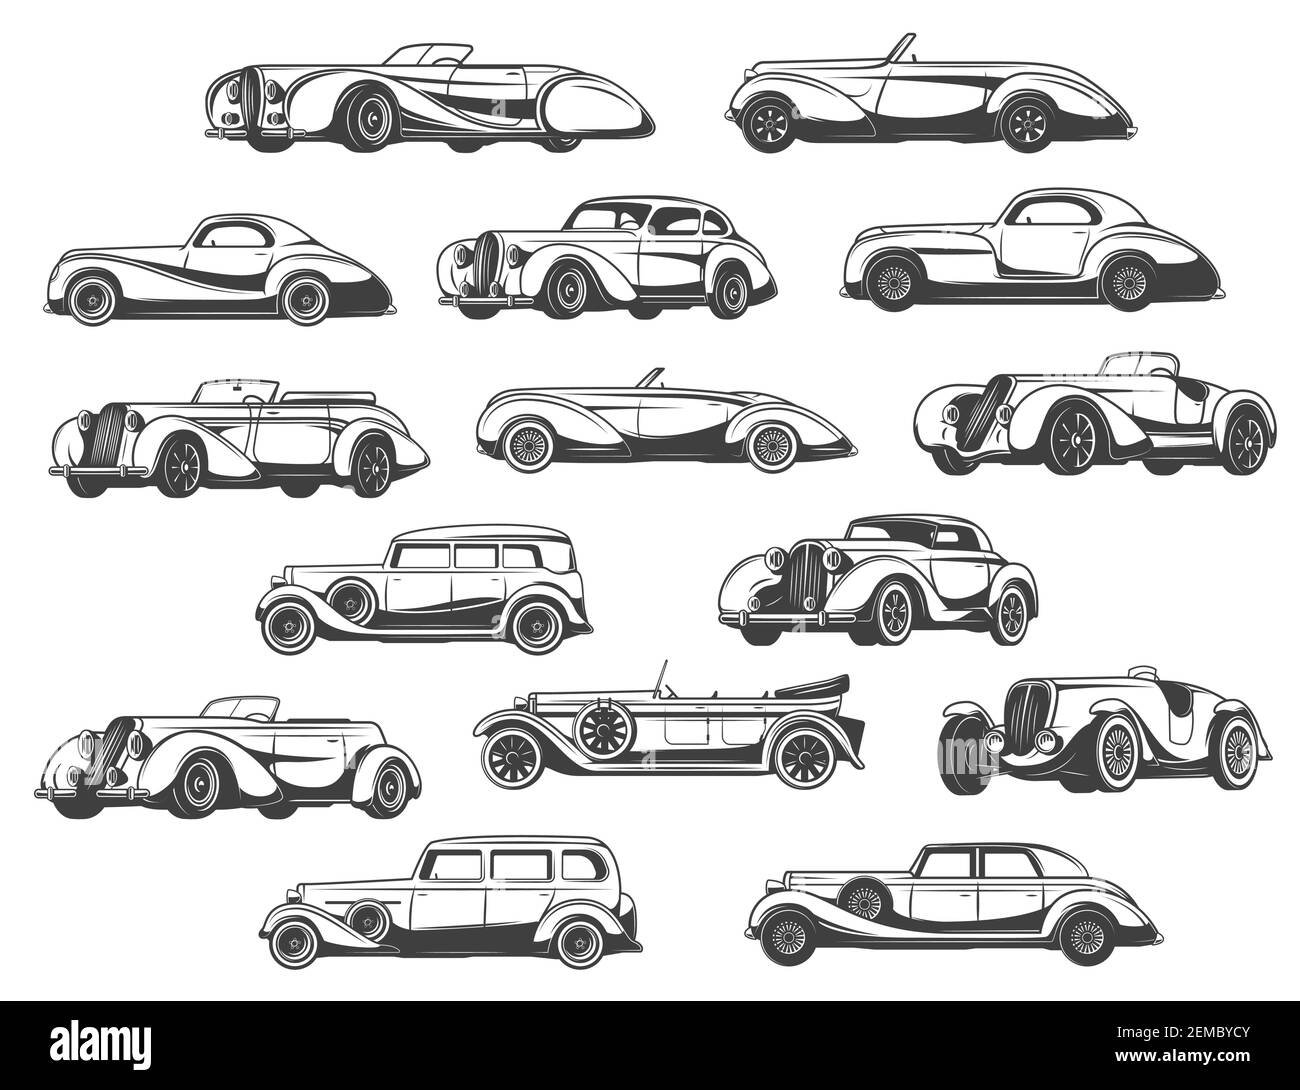 Retro-Autos setzen Vintage klassischen antiken Auto,  Automobil-Fahrzeugmodelle Vektor-Icons. 1950s, 1960s und 1930s Retro-Autos  Modelle, Cabrio Coupé und l Stock-Vektorgrafik - Alamy